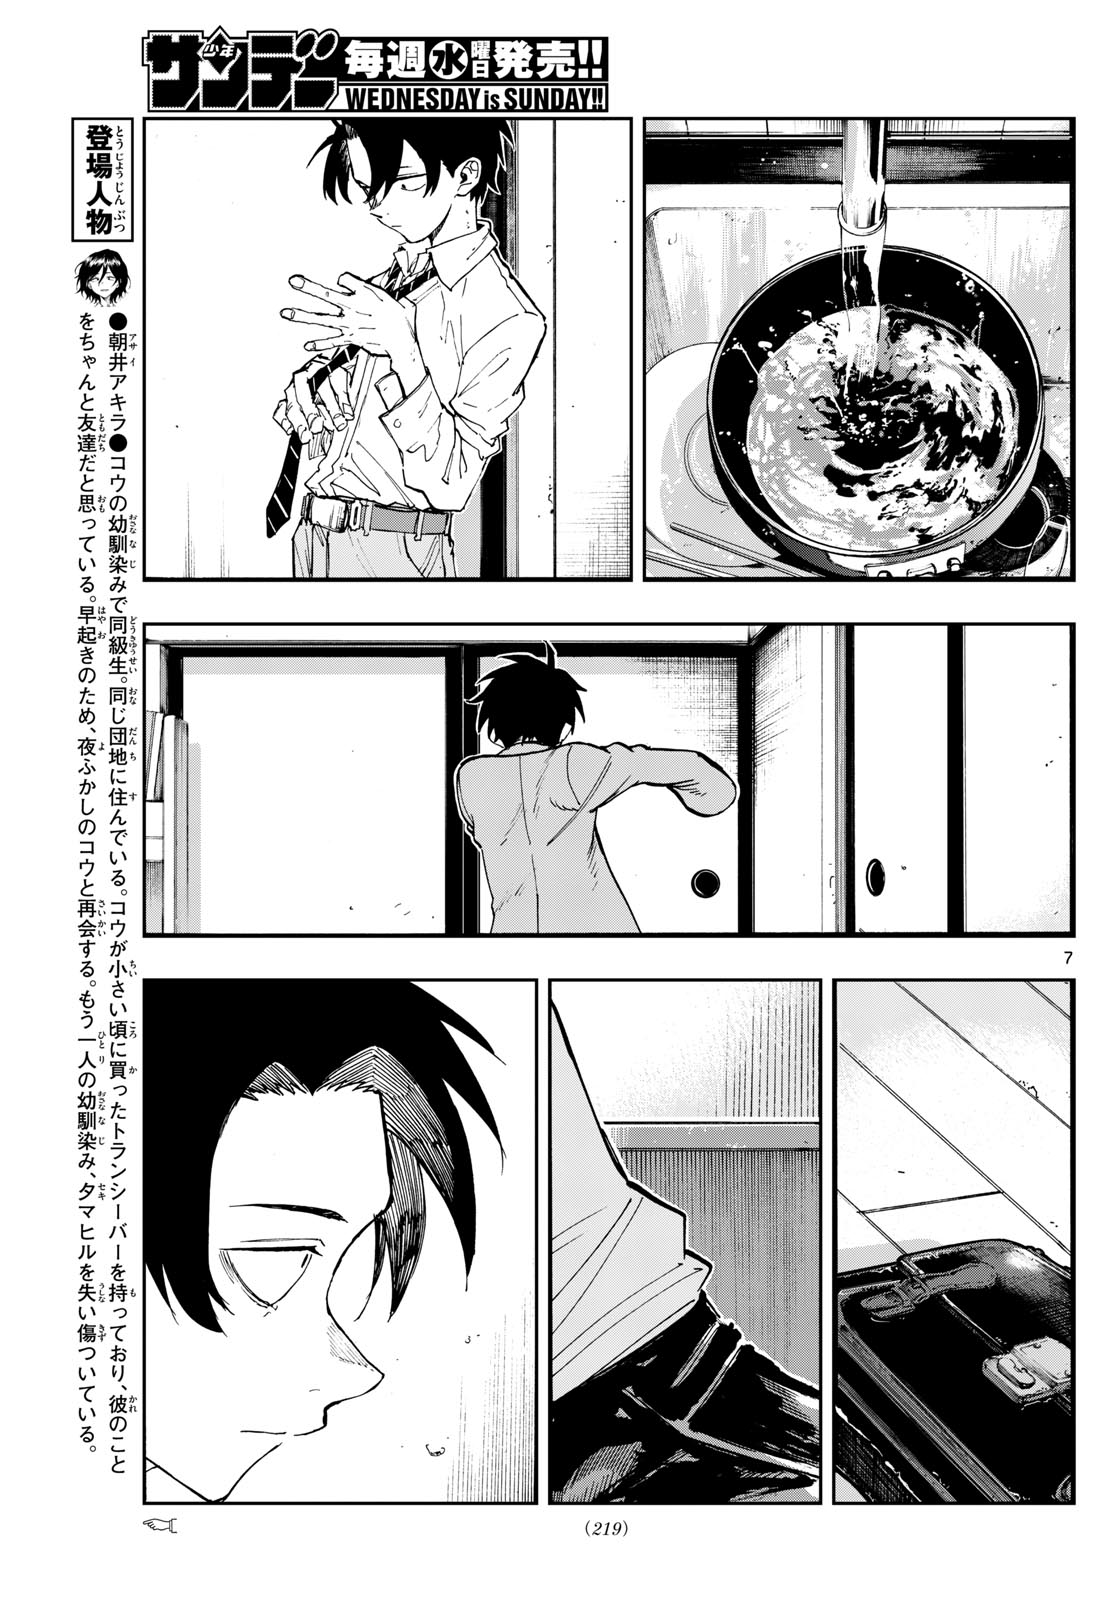 Yofukashi no Uta Chapter 185 – Rawkuma